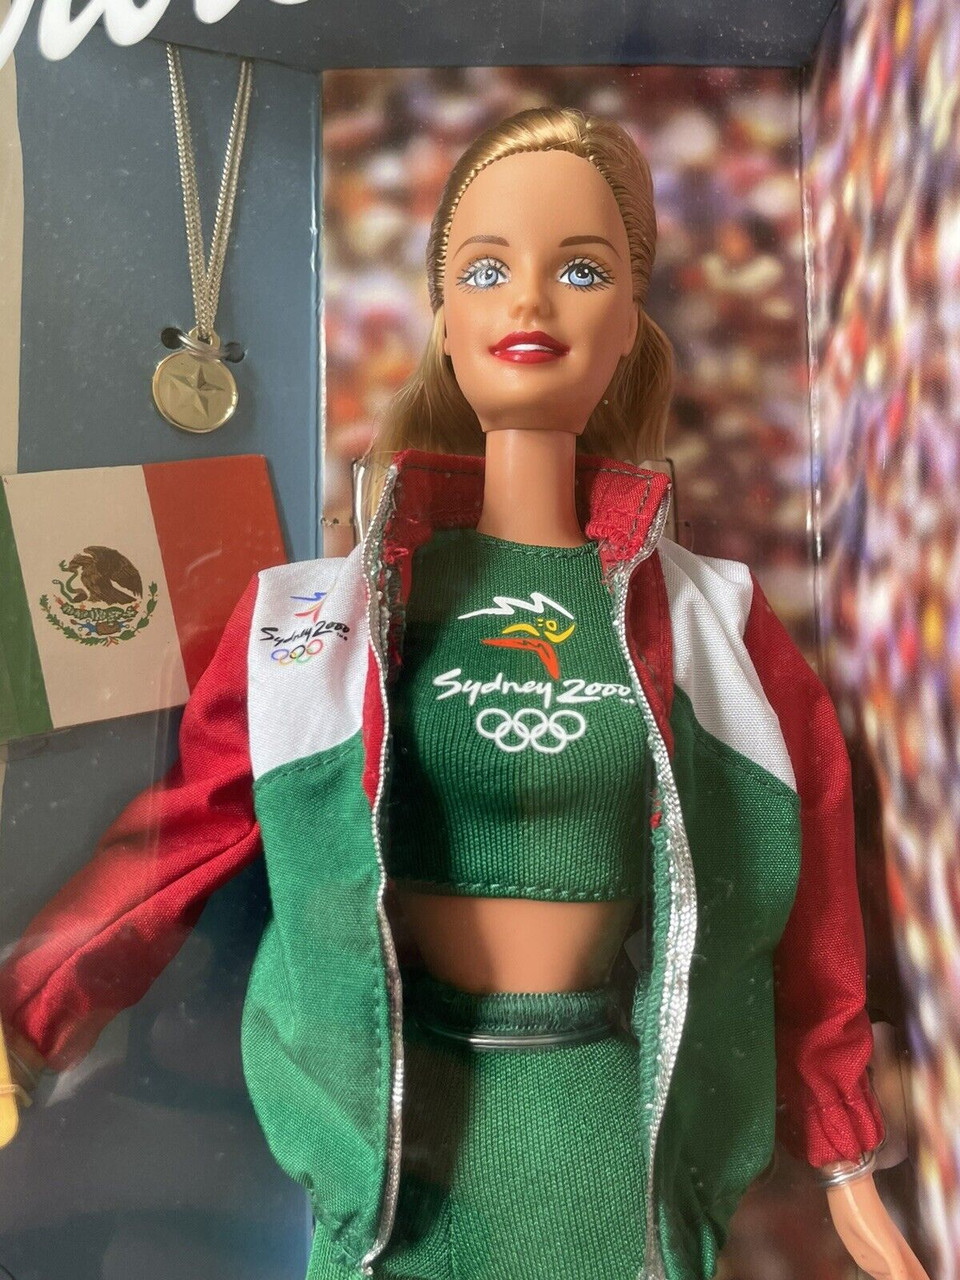 Sydney 2000 Olympics Mexico Aficionada Olimpica Barbie Doll 1999